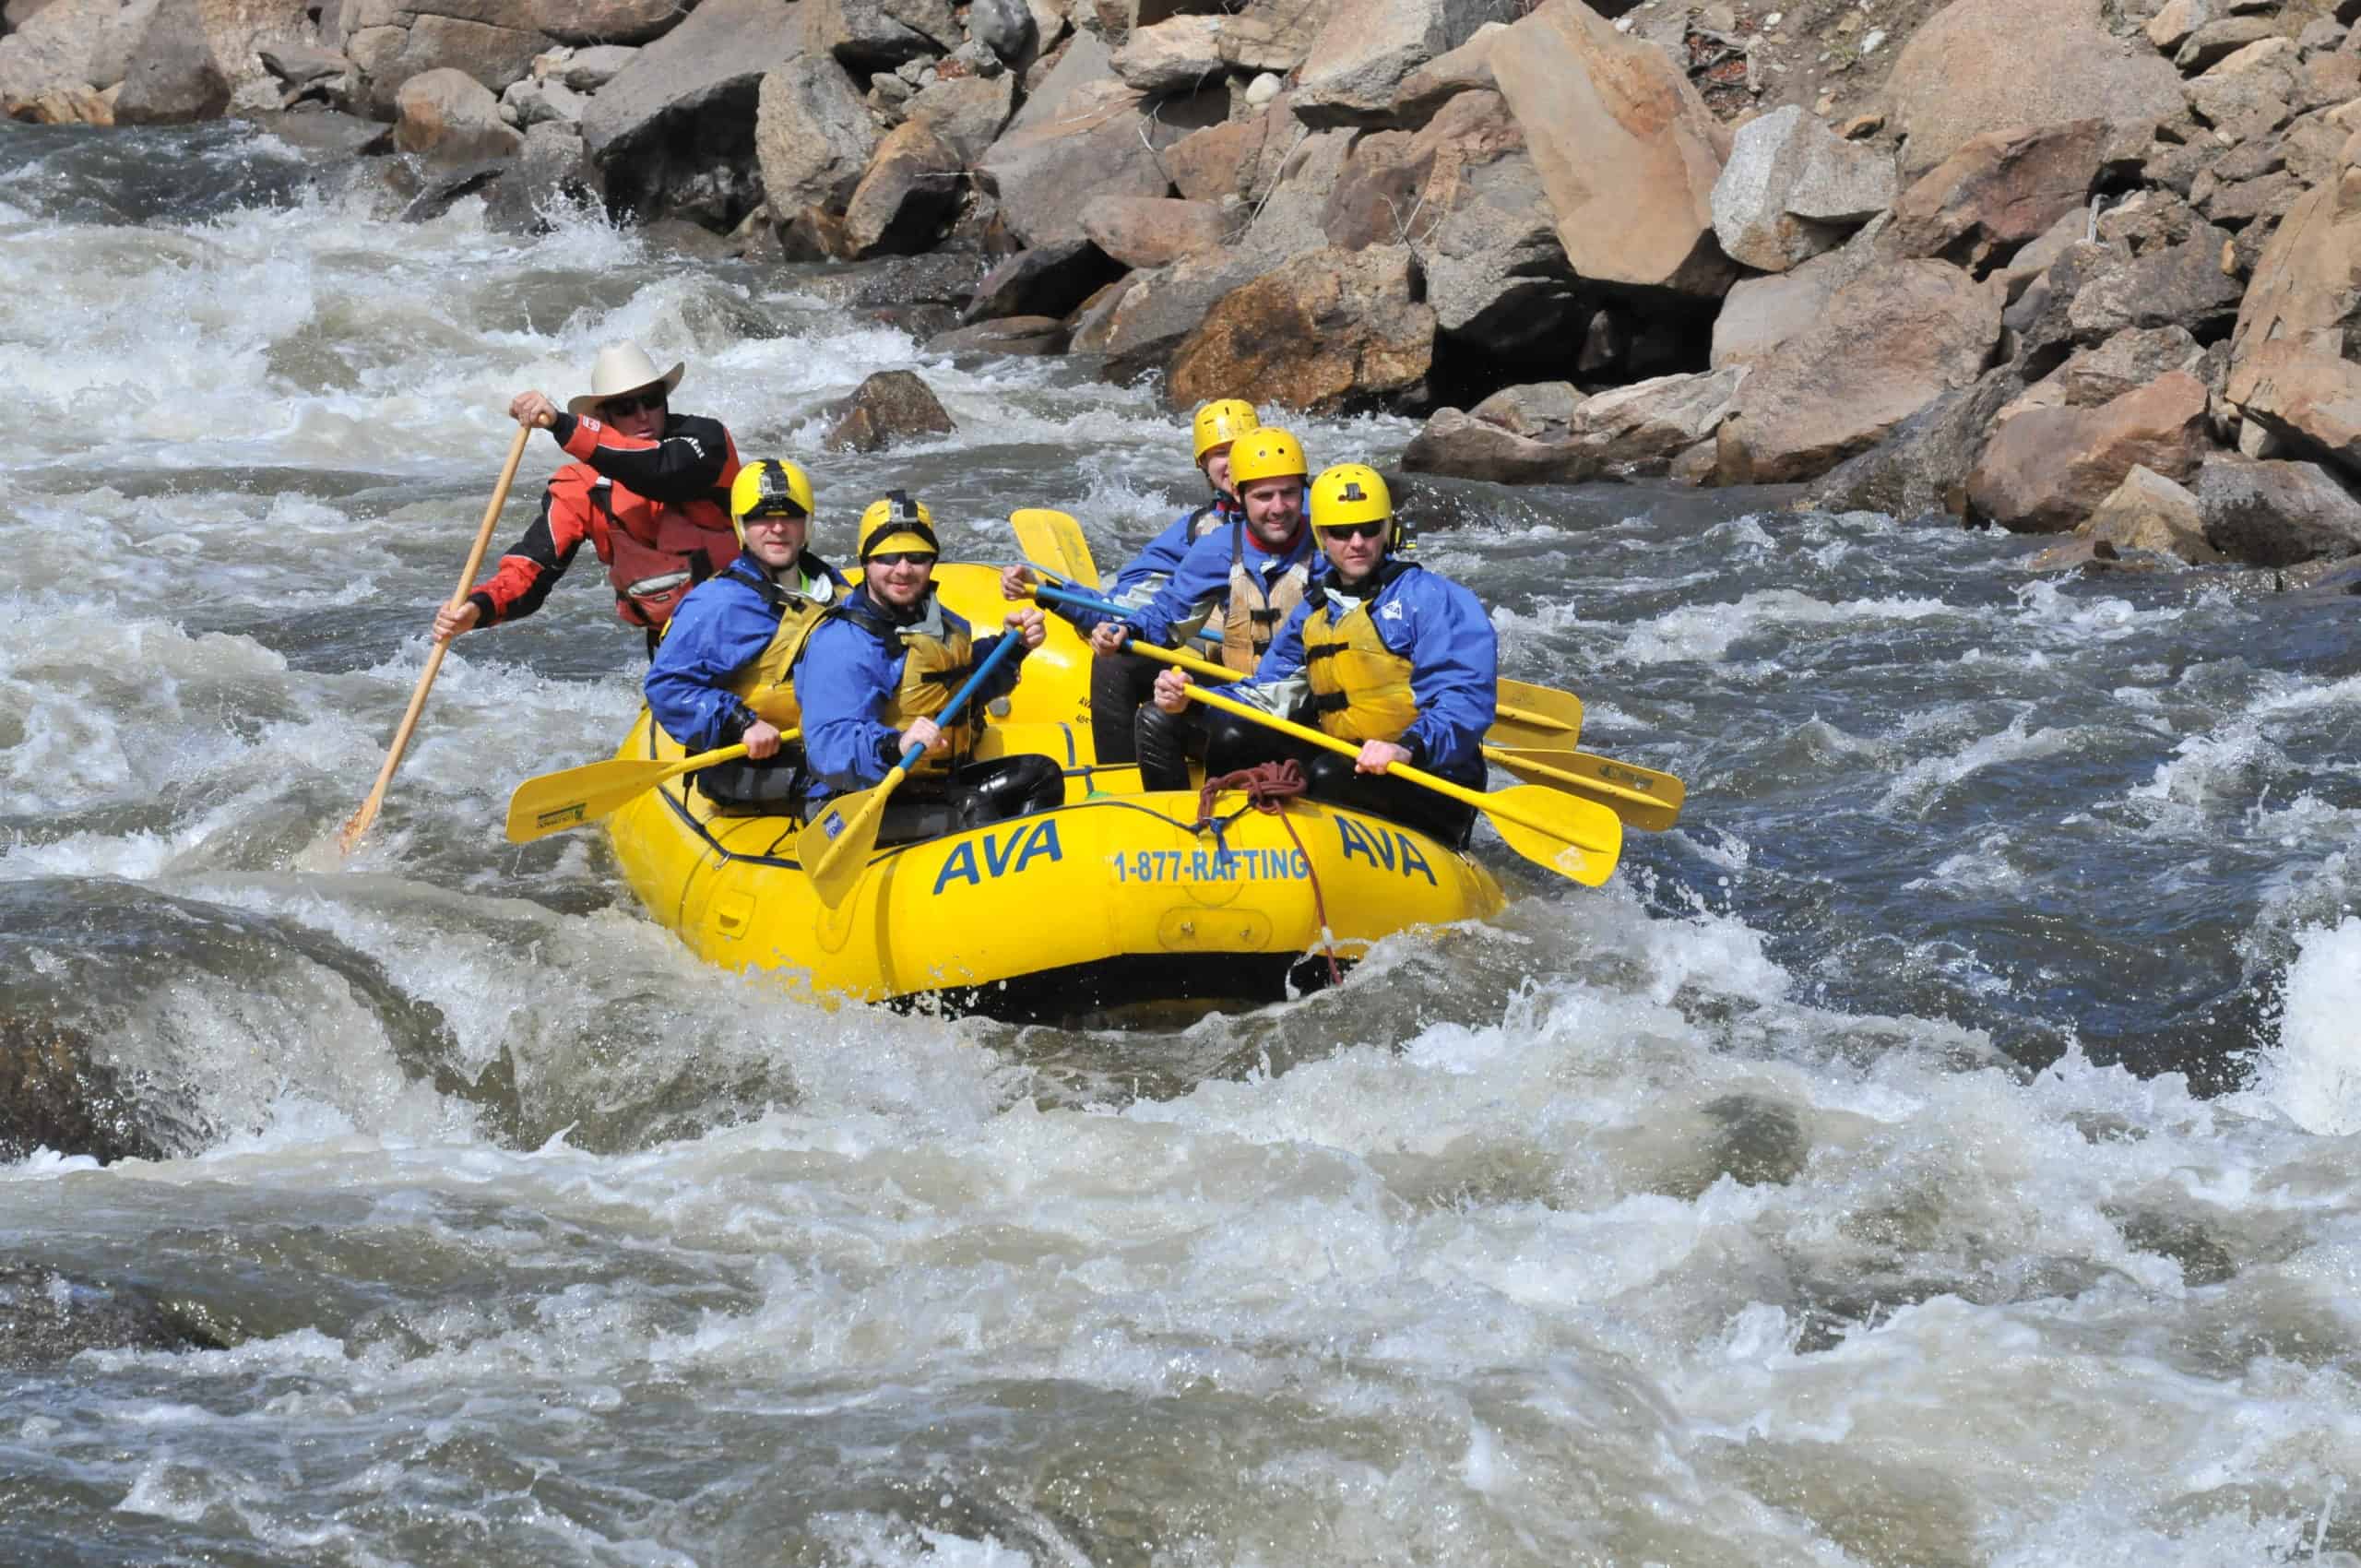 Whitewater Rafting Colorado